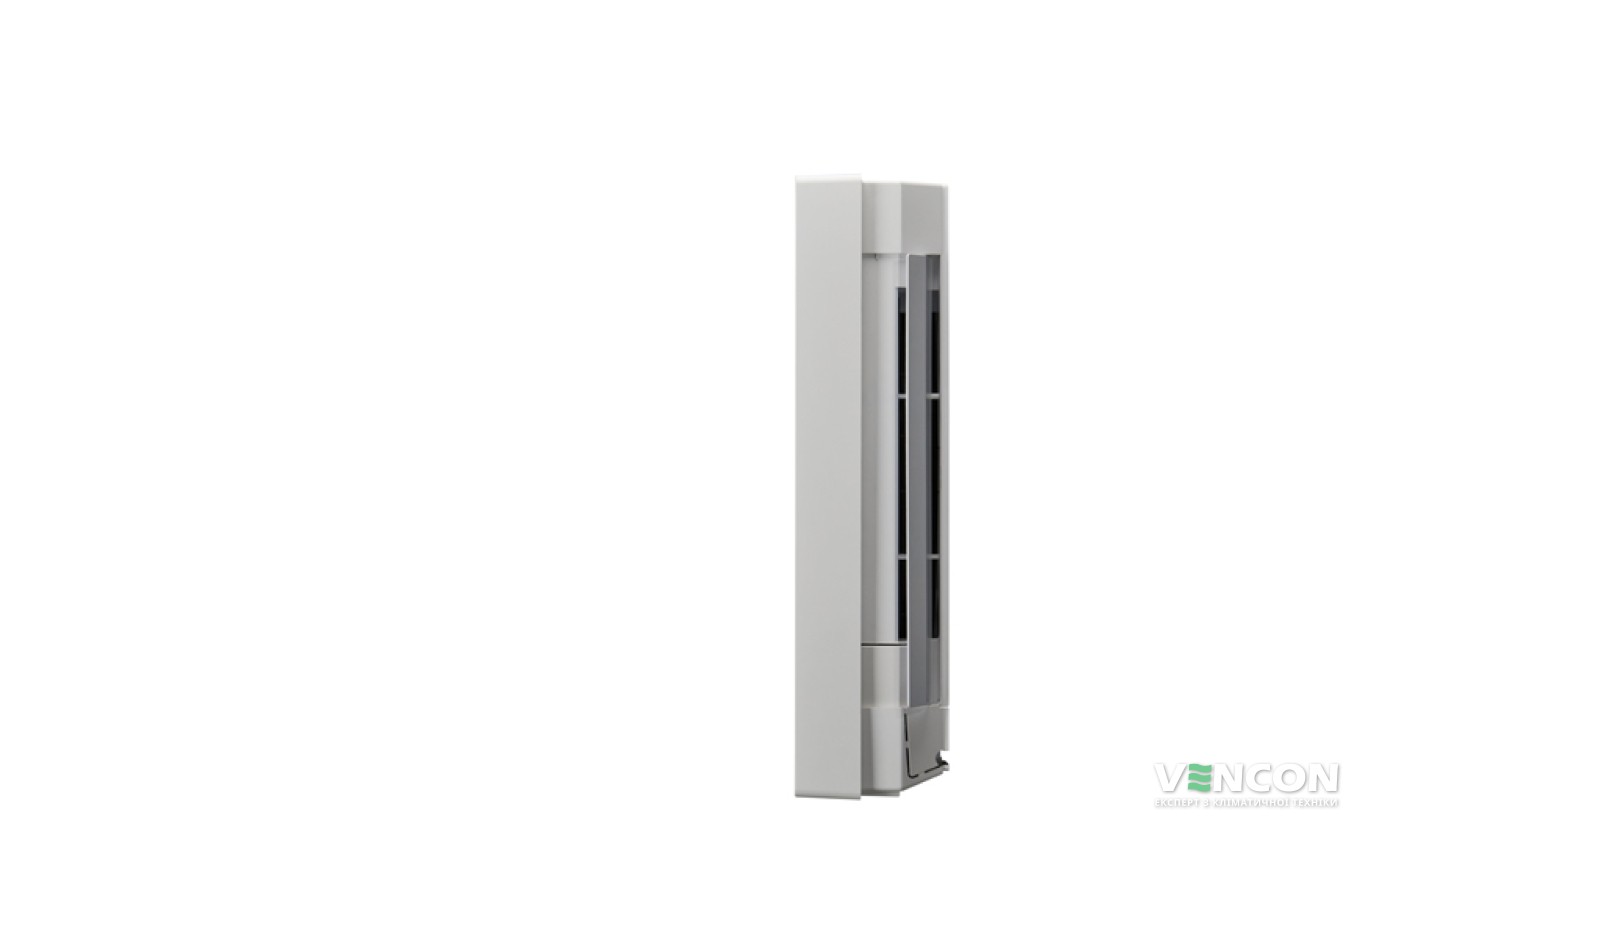 Кондиционер сплит-система LG Artcool Stylist A12IWK внешний вид - фото 9